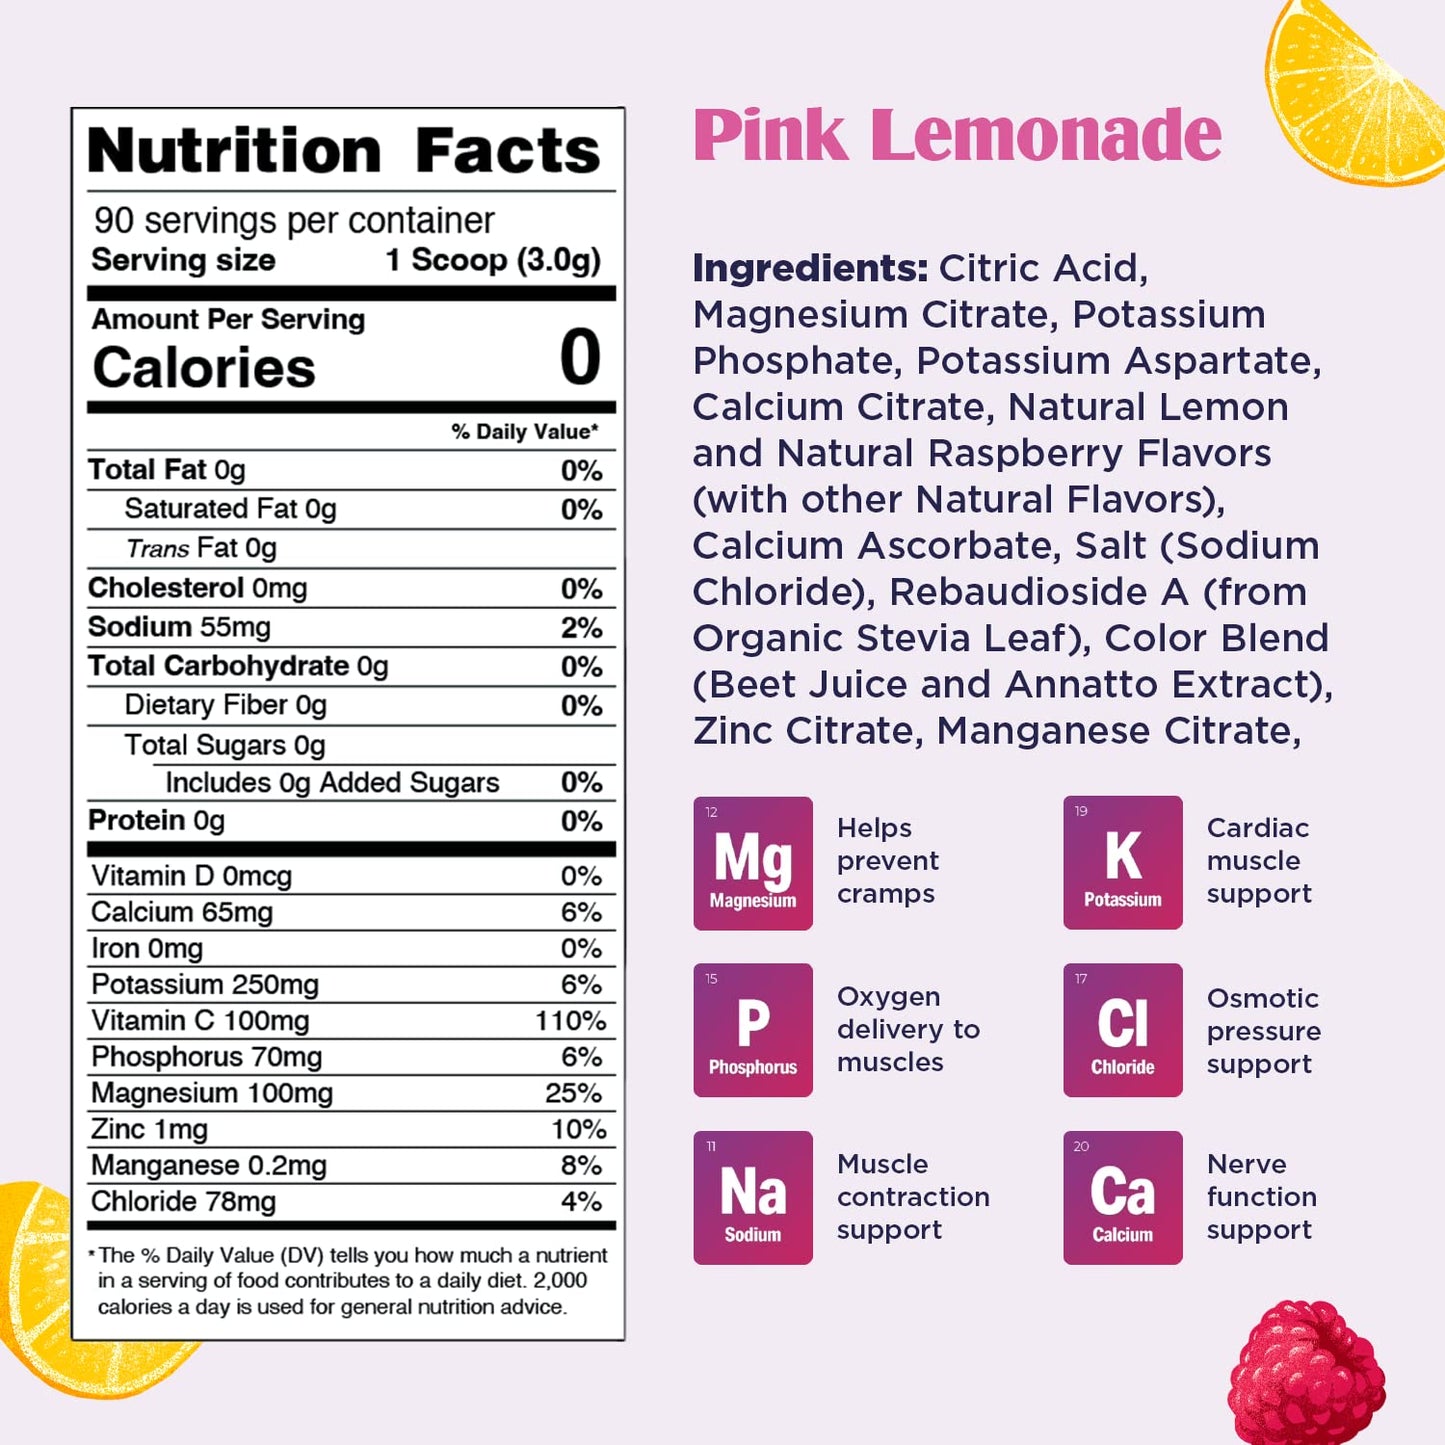 Ultima Replenisher Hydration Electrolyte Powder- 90 Servings- Keto & Sugar Free- Feel Replenished, Revitalized- Naturally Sweetened- Non- GMO & Vegan Electrolyte Drink Mix- Pink Lemonade